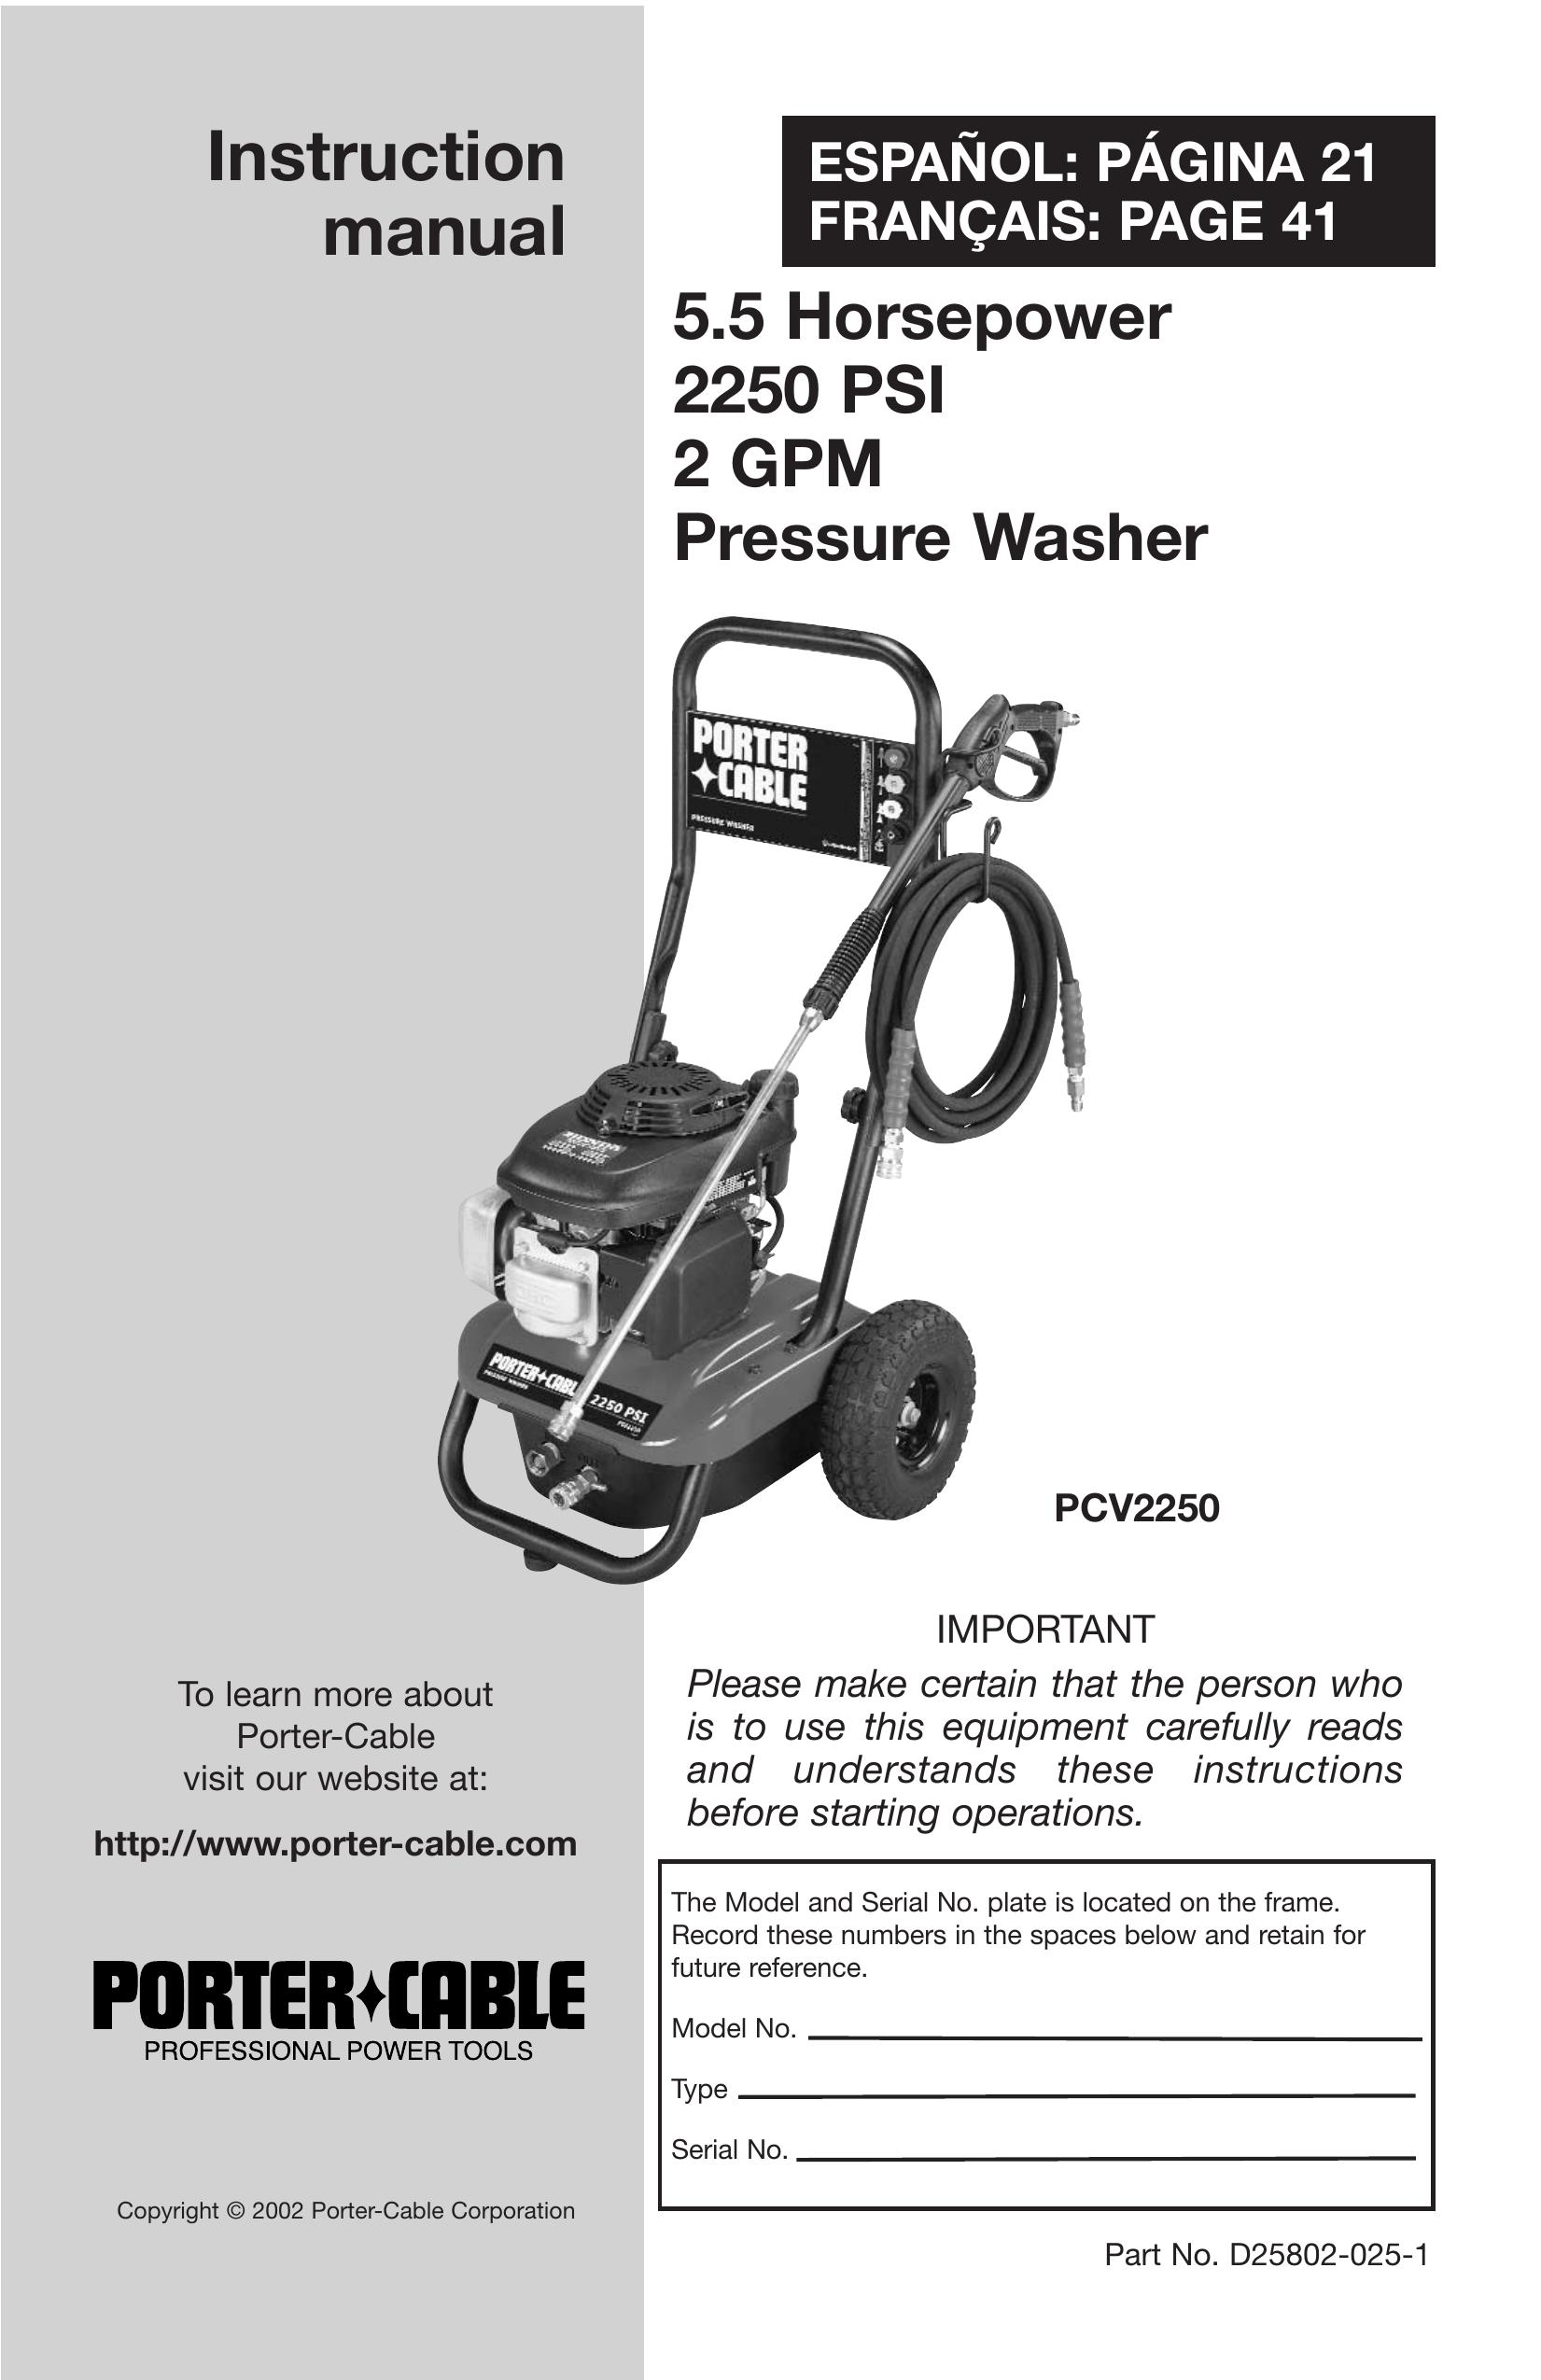 Porter-Cable PCV2250 Pressure Washer User Manual